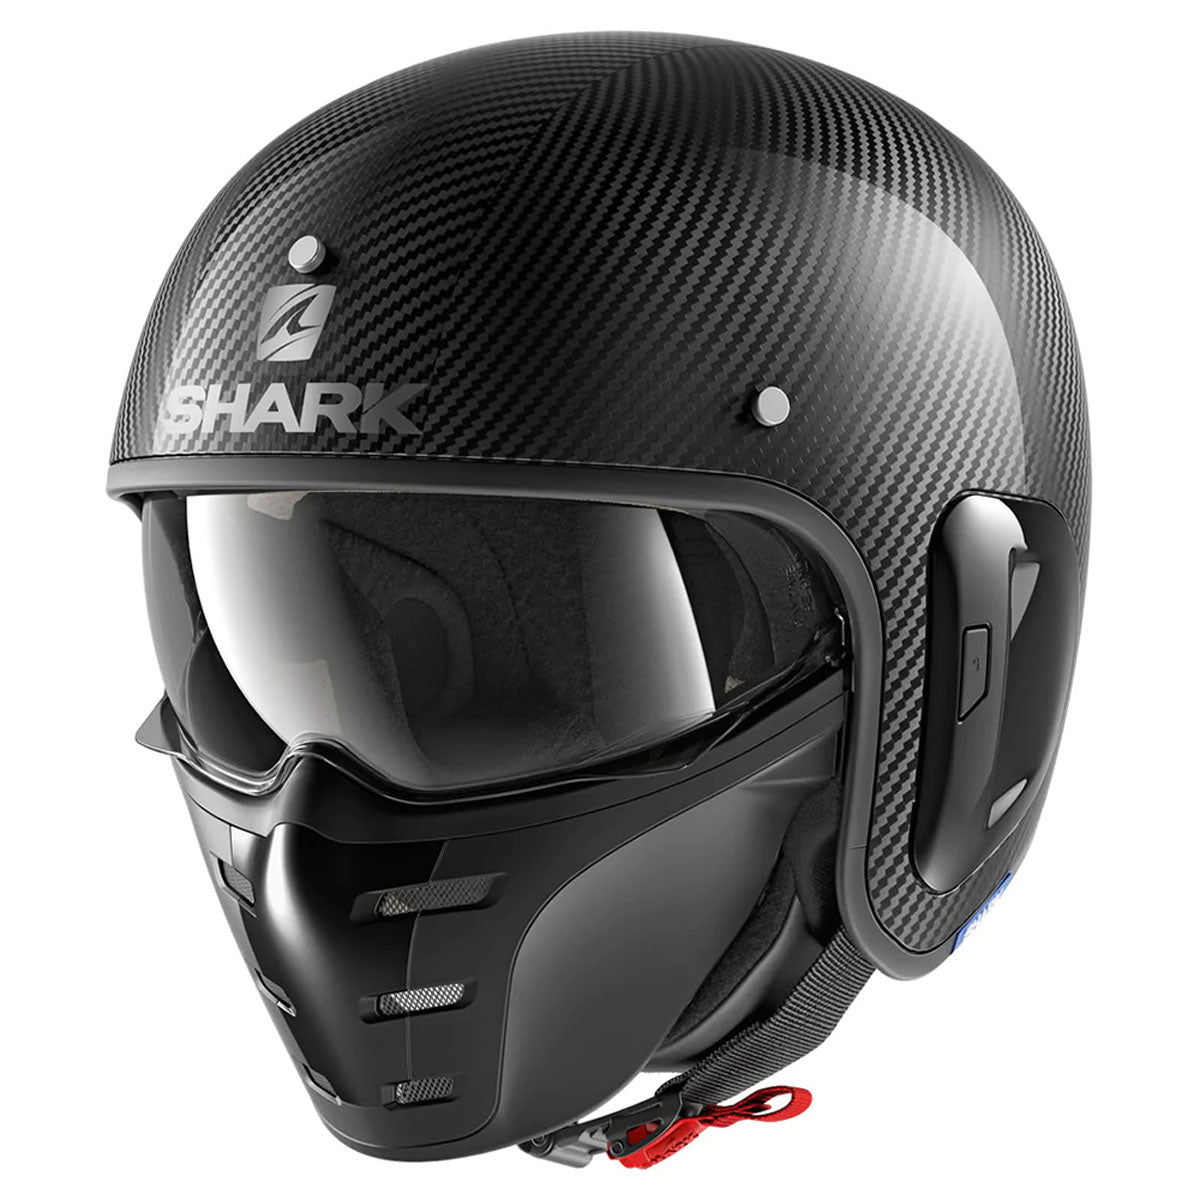 Shark S-Drak Carbon Skin Helmet - ExtremeSupply.com